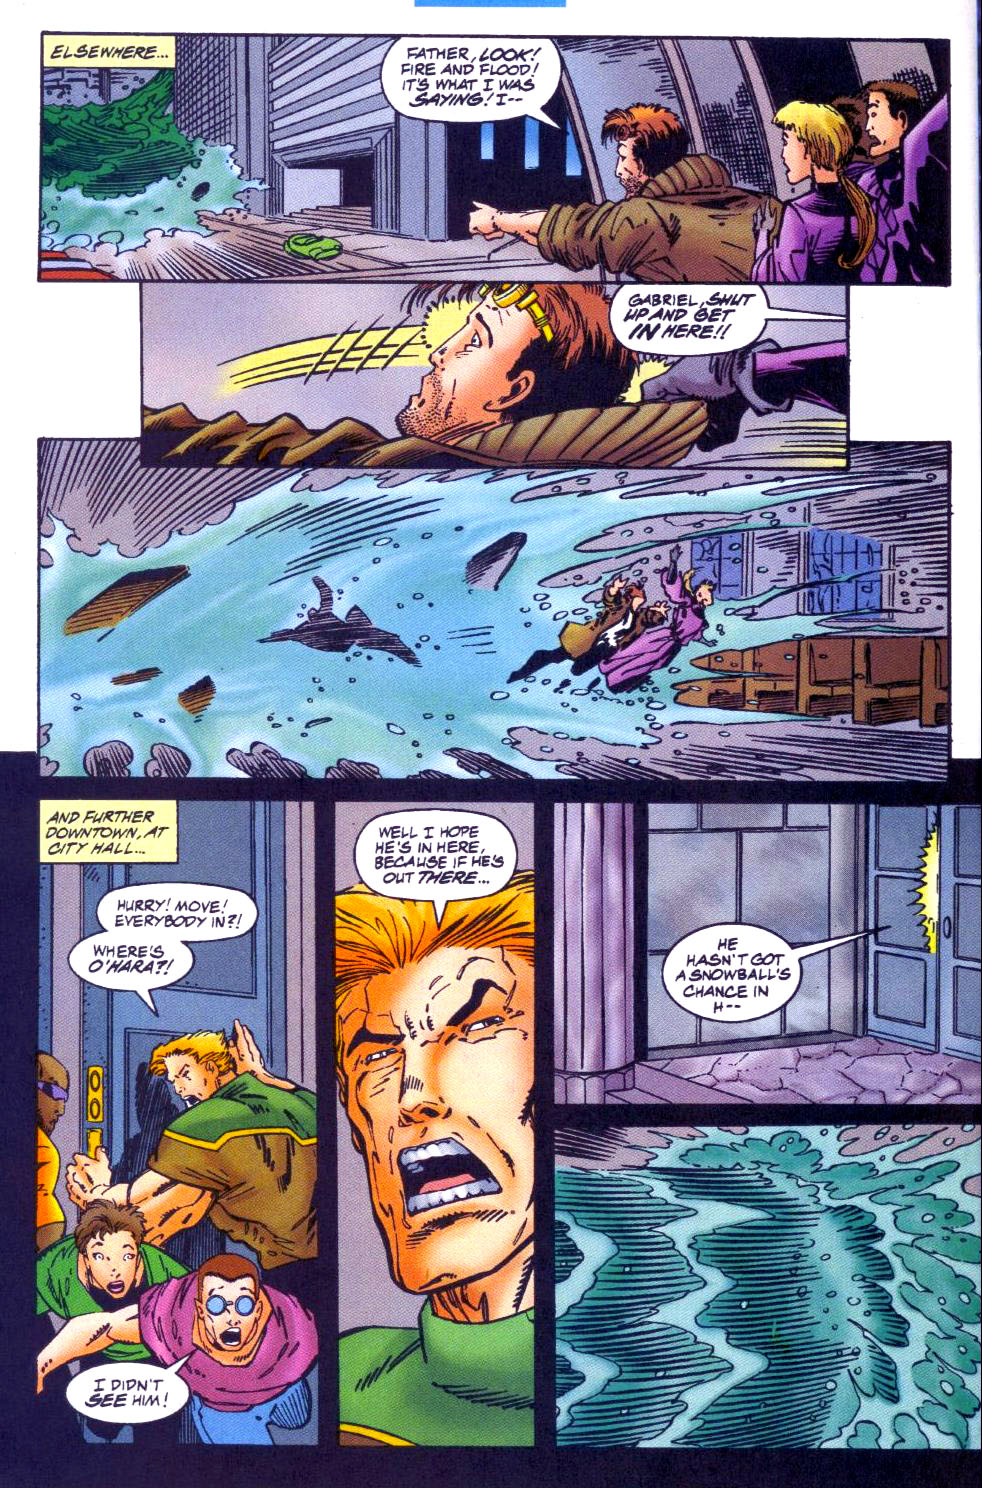 Spider-Man 2099 (1992) issue 43 - Page 19